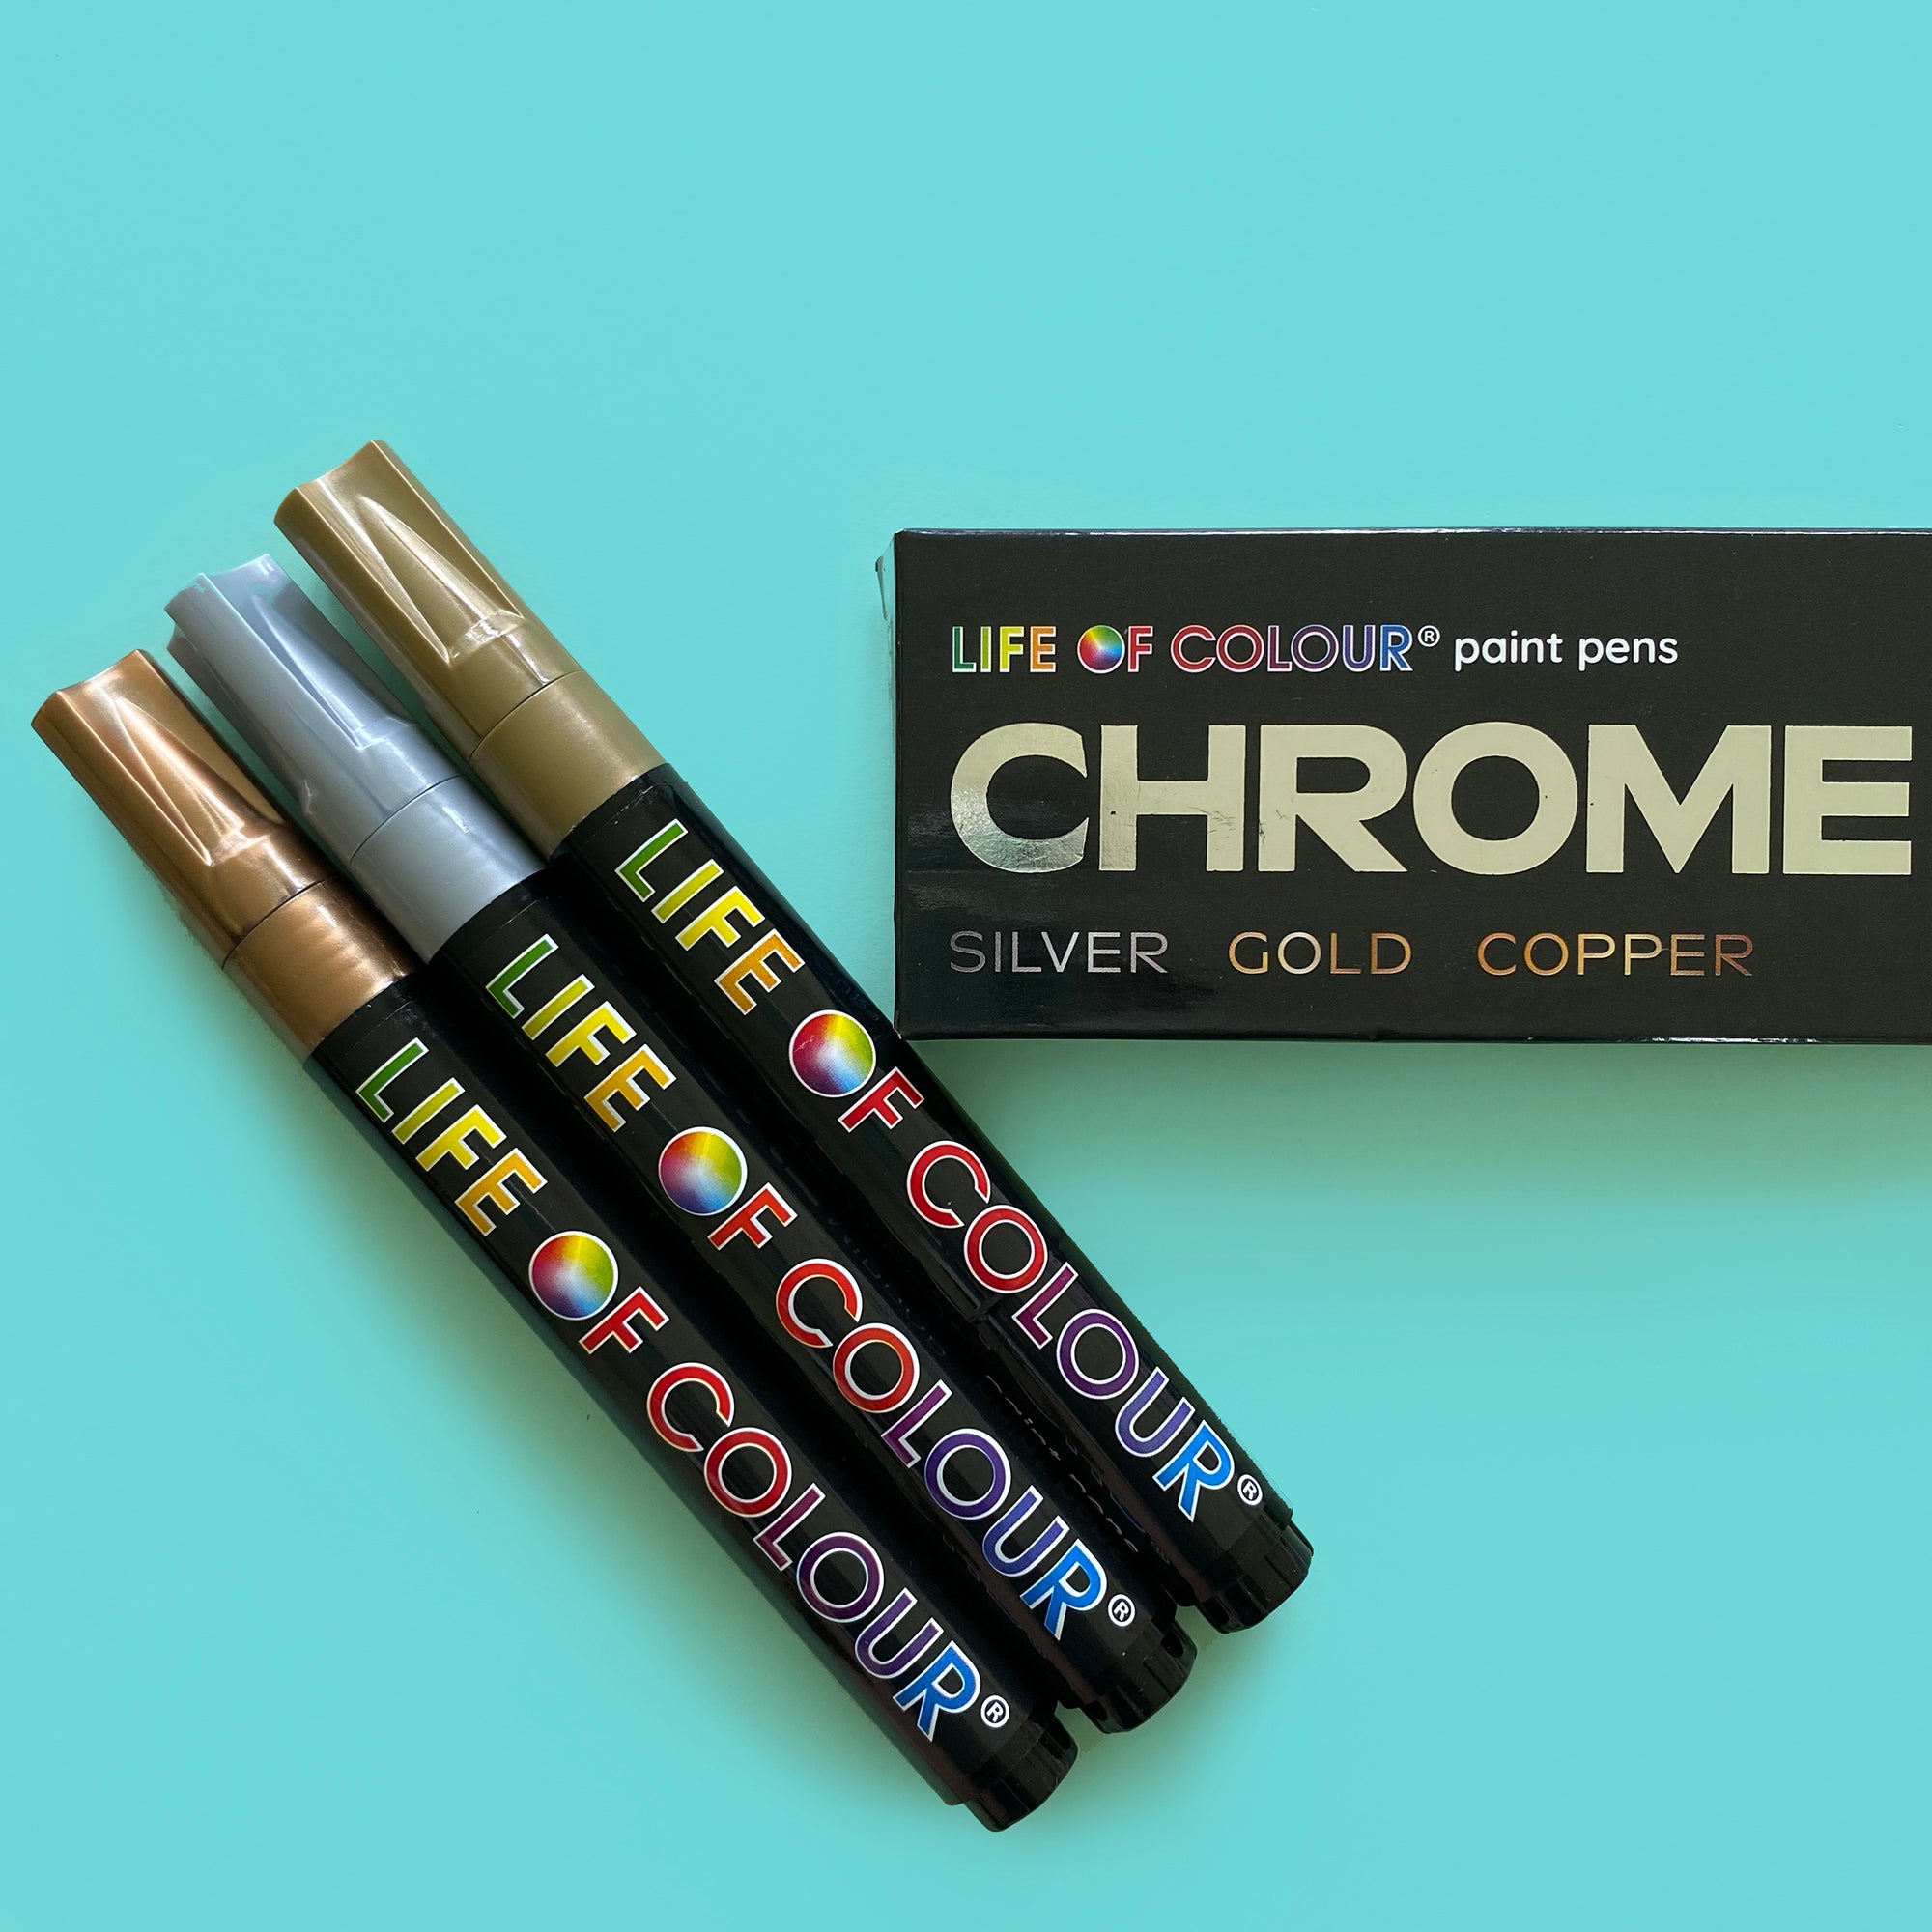 3 Life of Colour Acrylic Paint Pens - Chrome Mirror Effect - 30% OFF